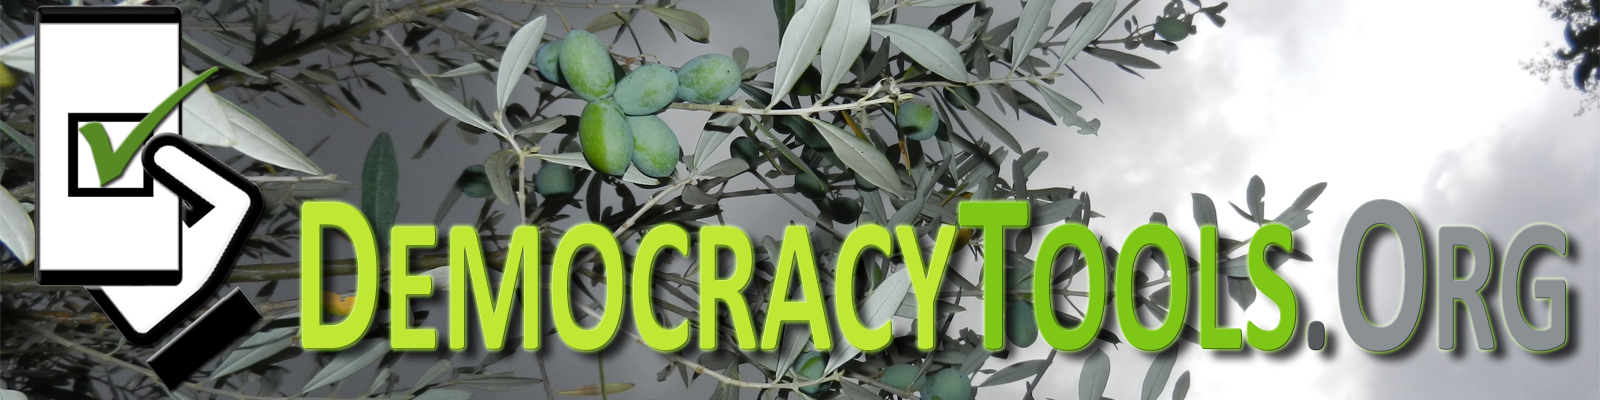 Democracytools-Header